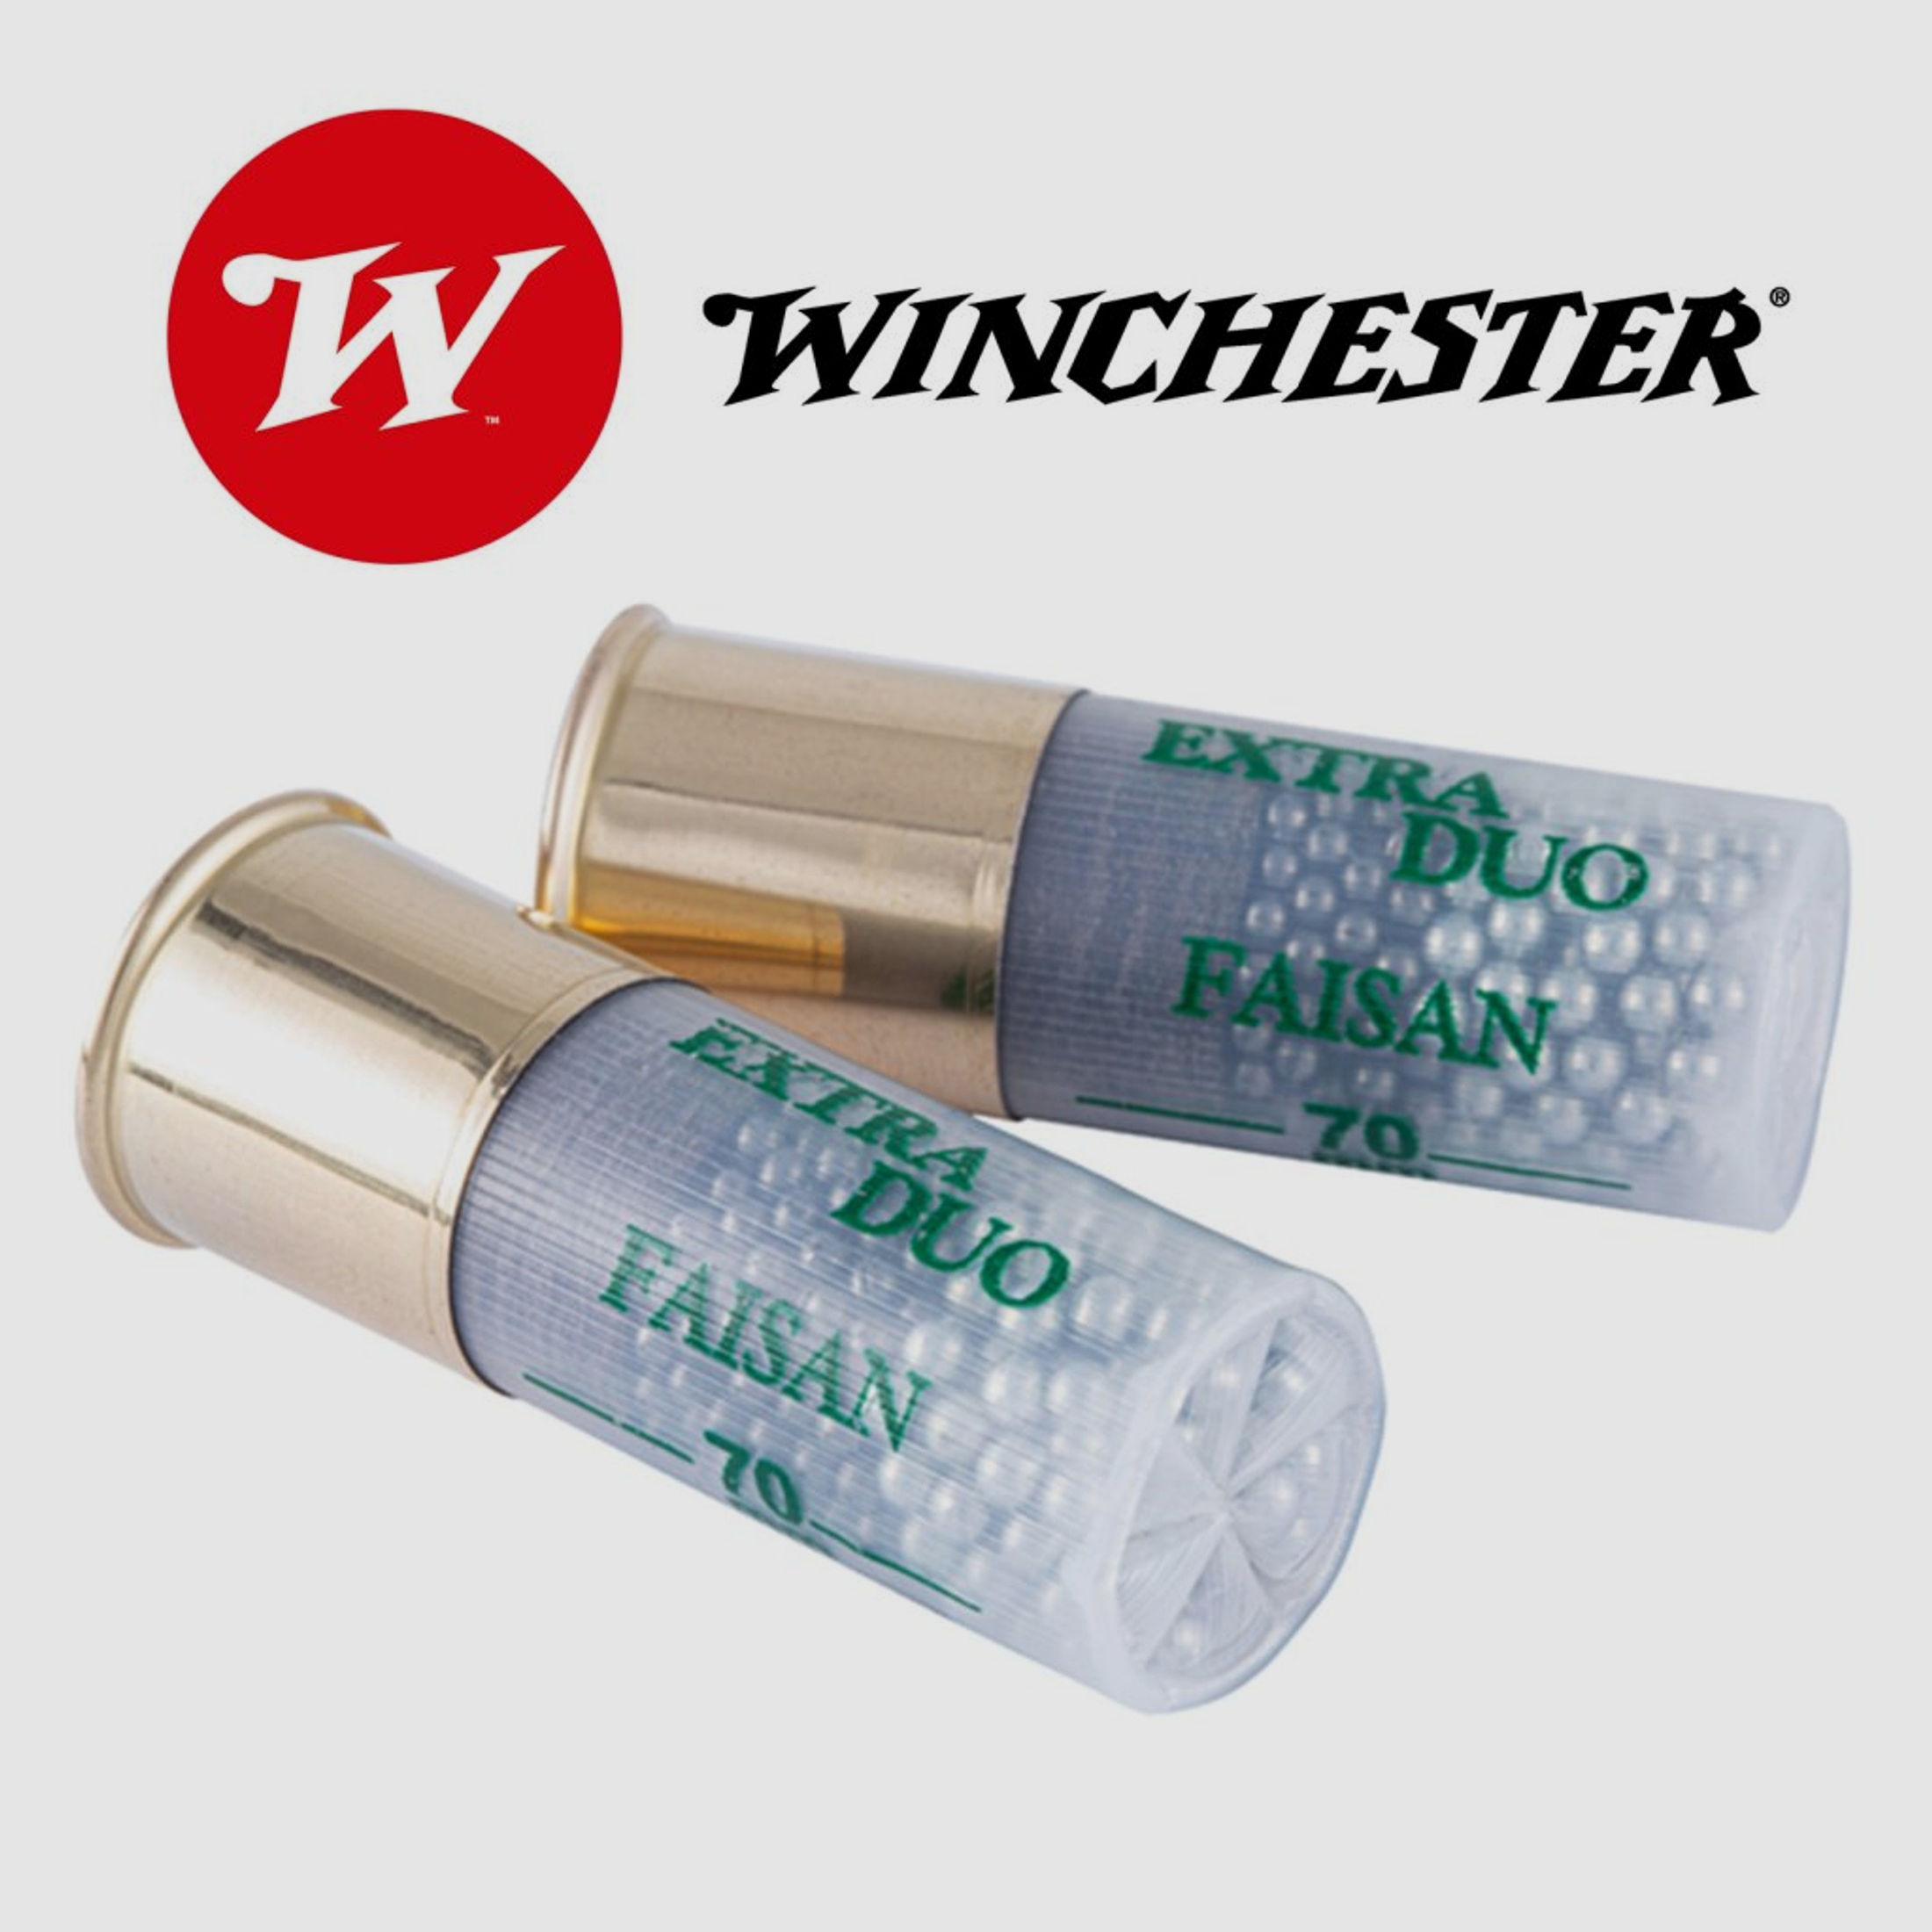 WINCHESTER Extra Duo Faisan 12/70